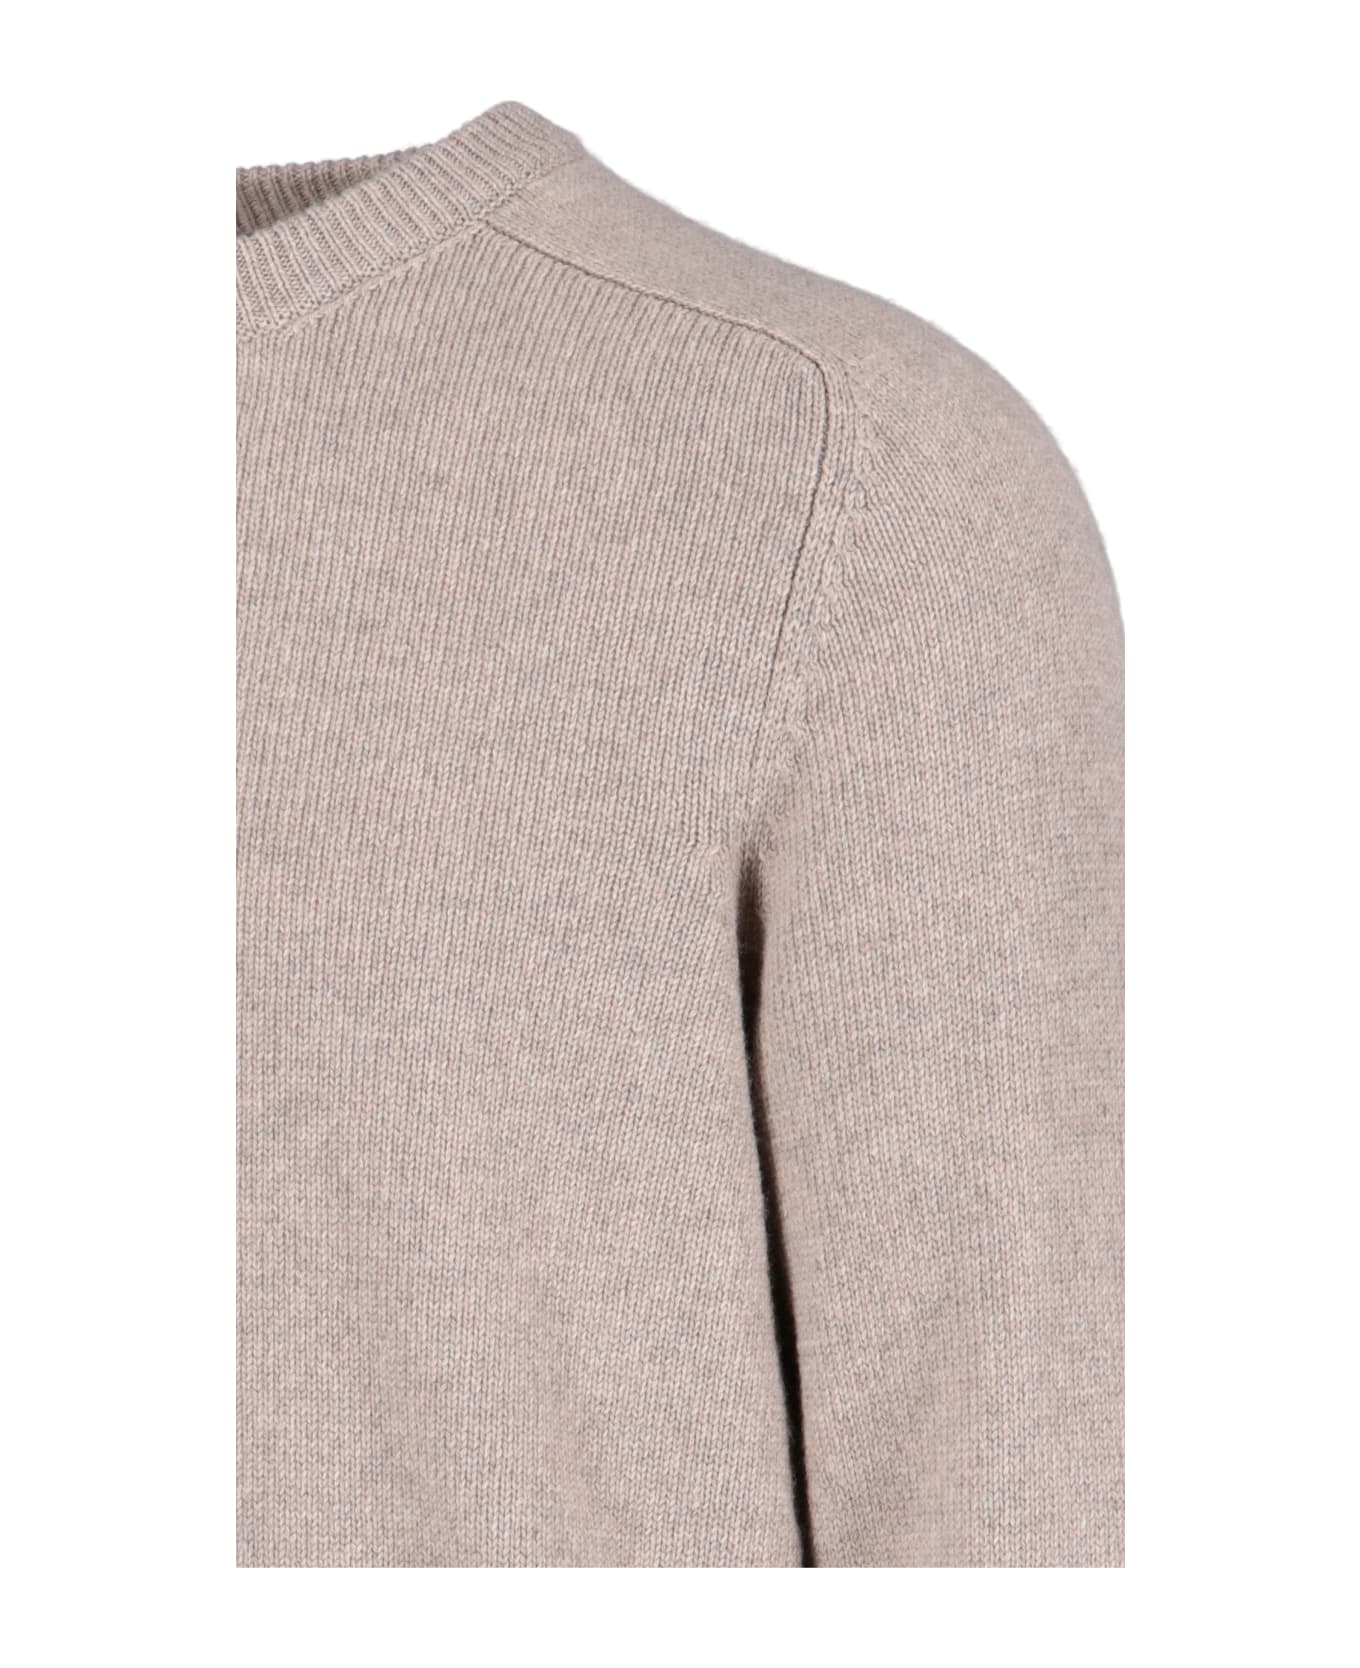 Tom Ford Sweater - Beige